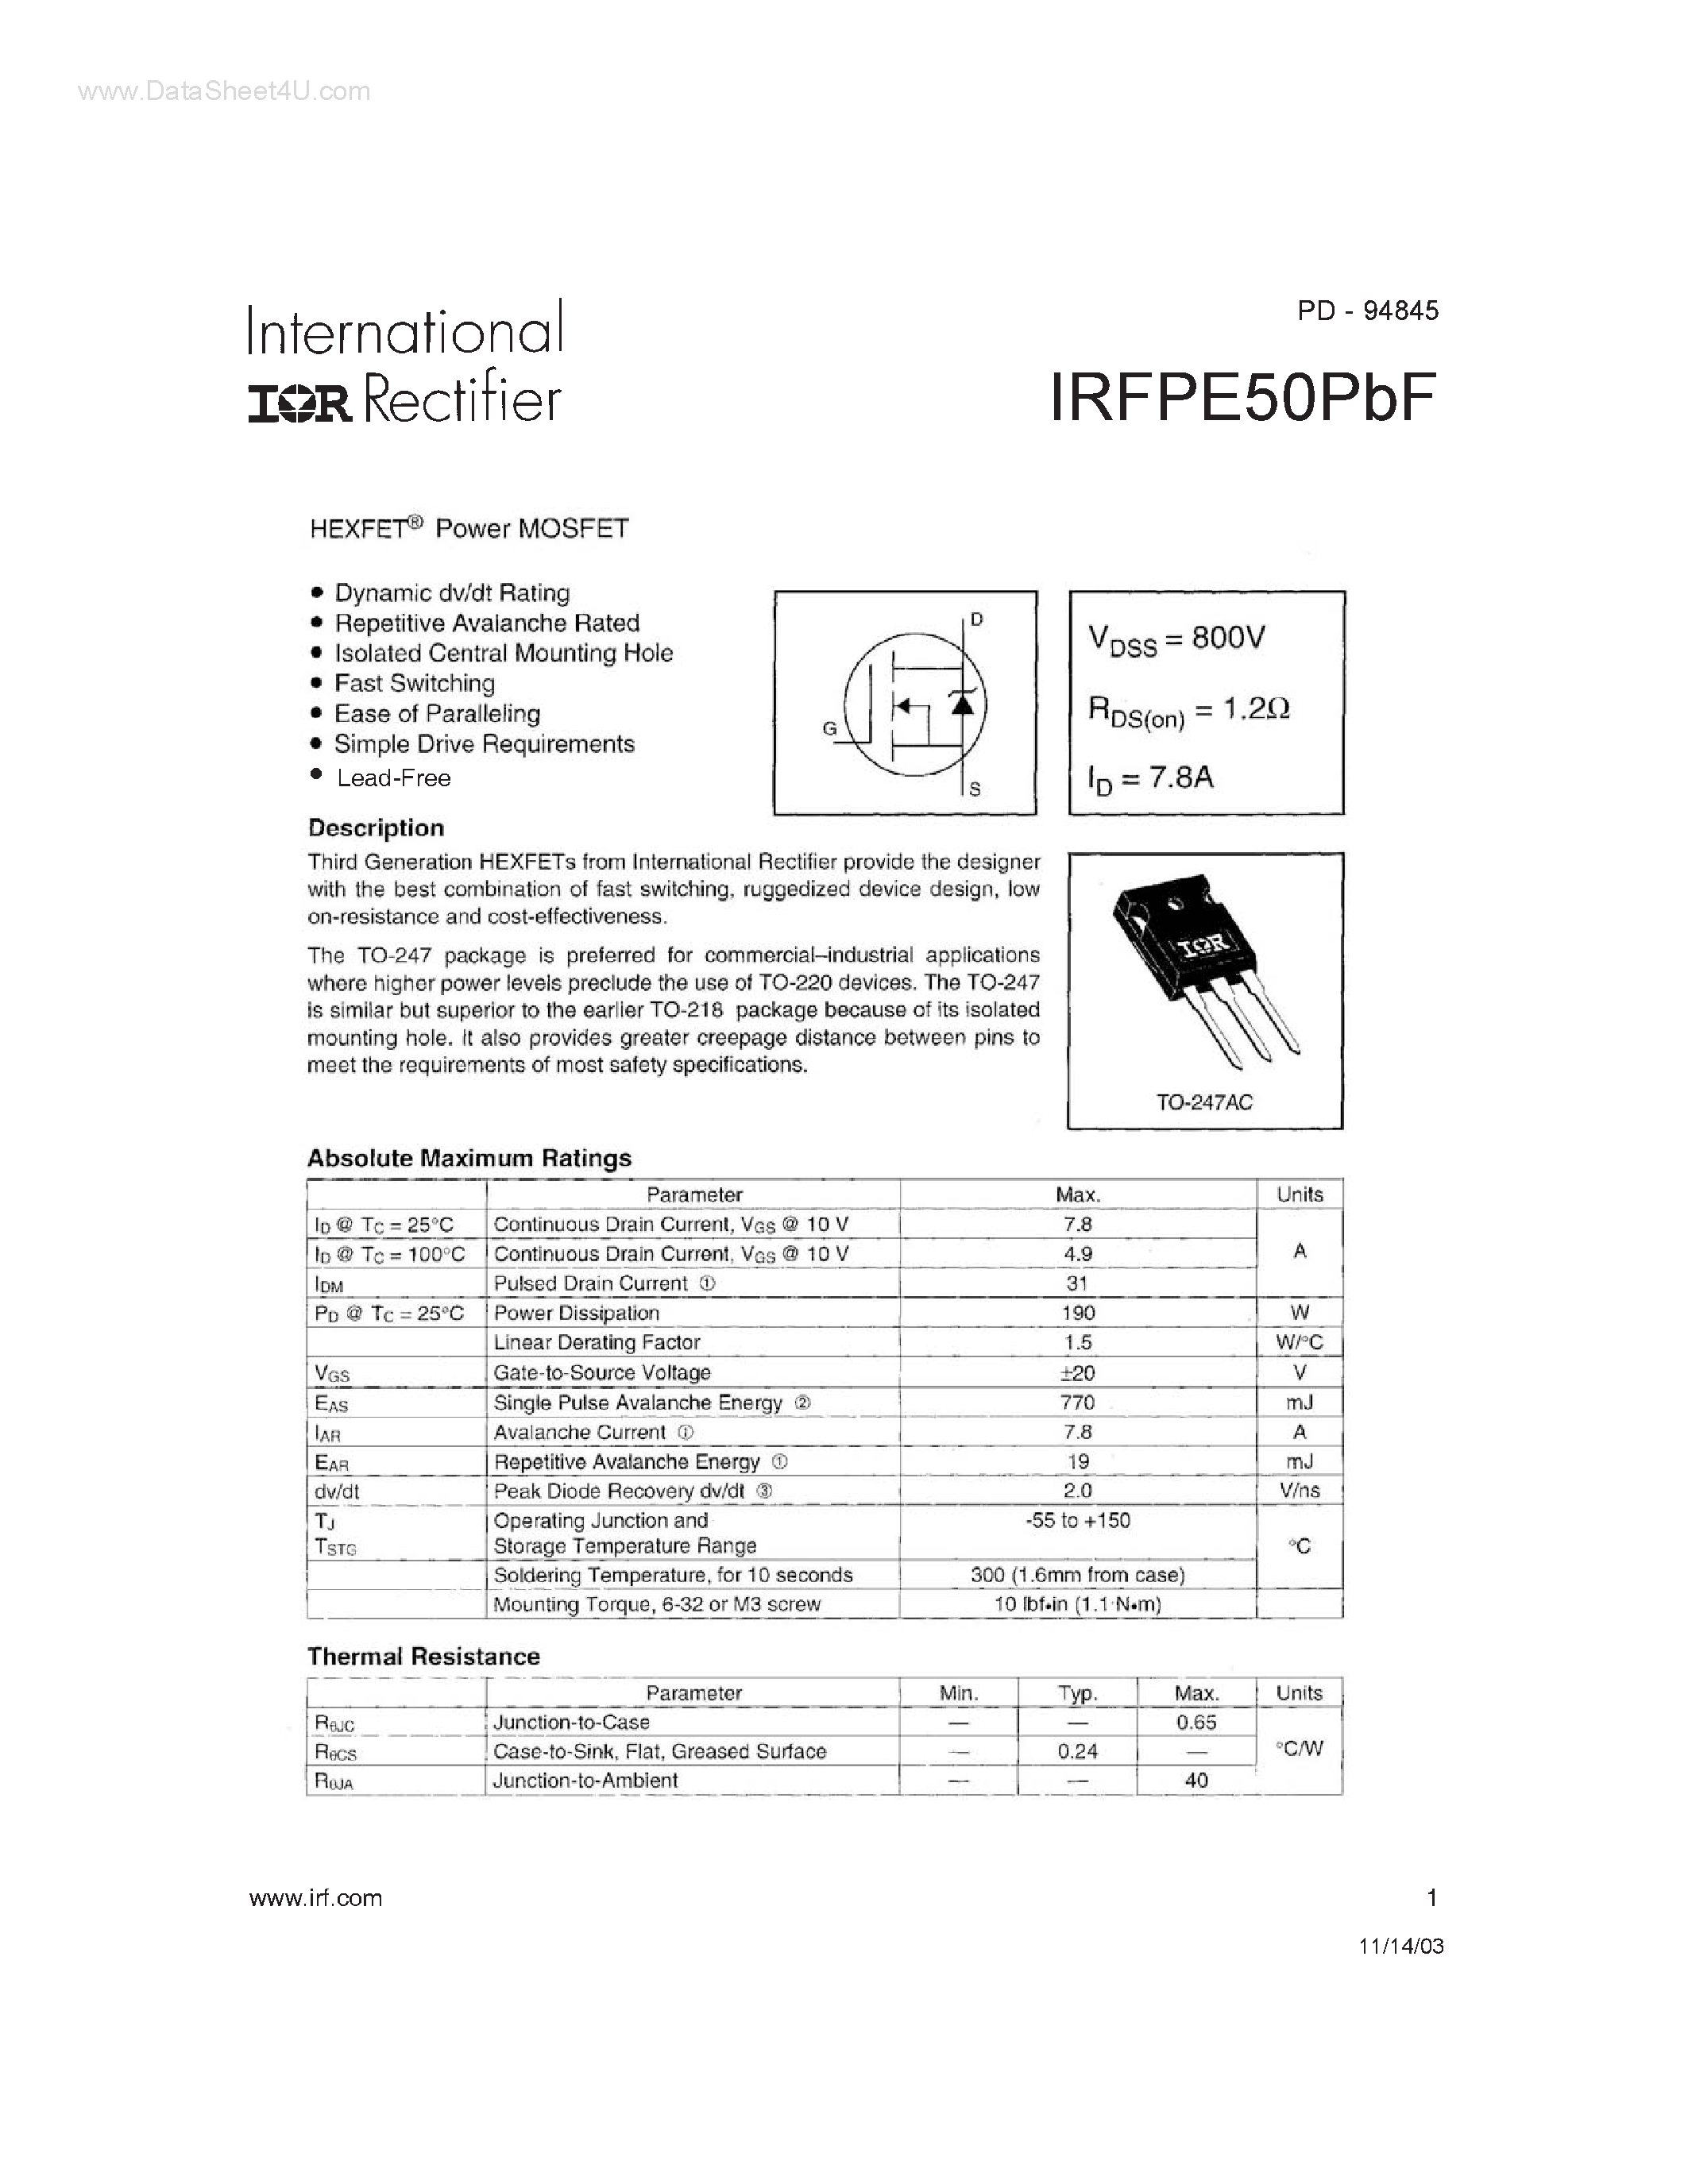 Даташит IRFPE50PBF - Power MOSFET страница 1